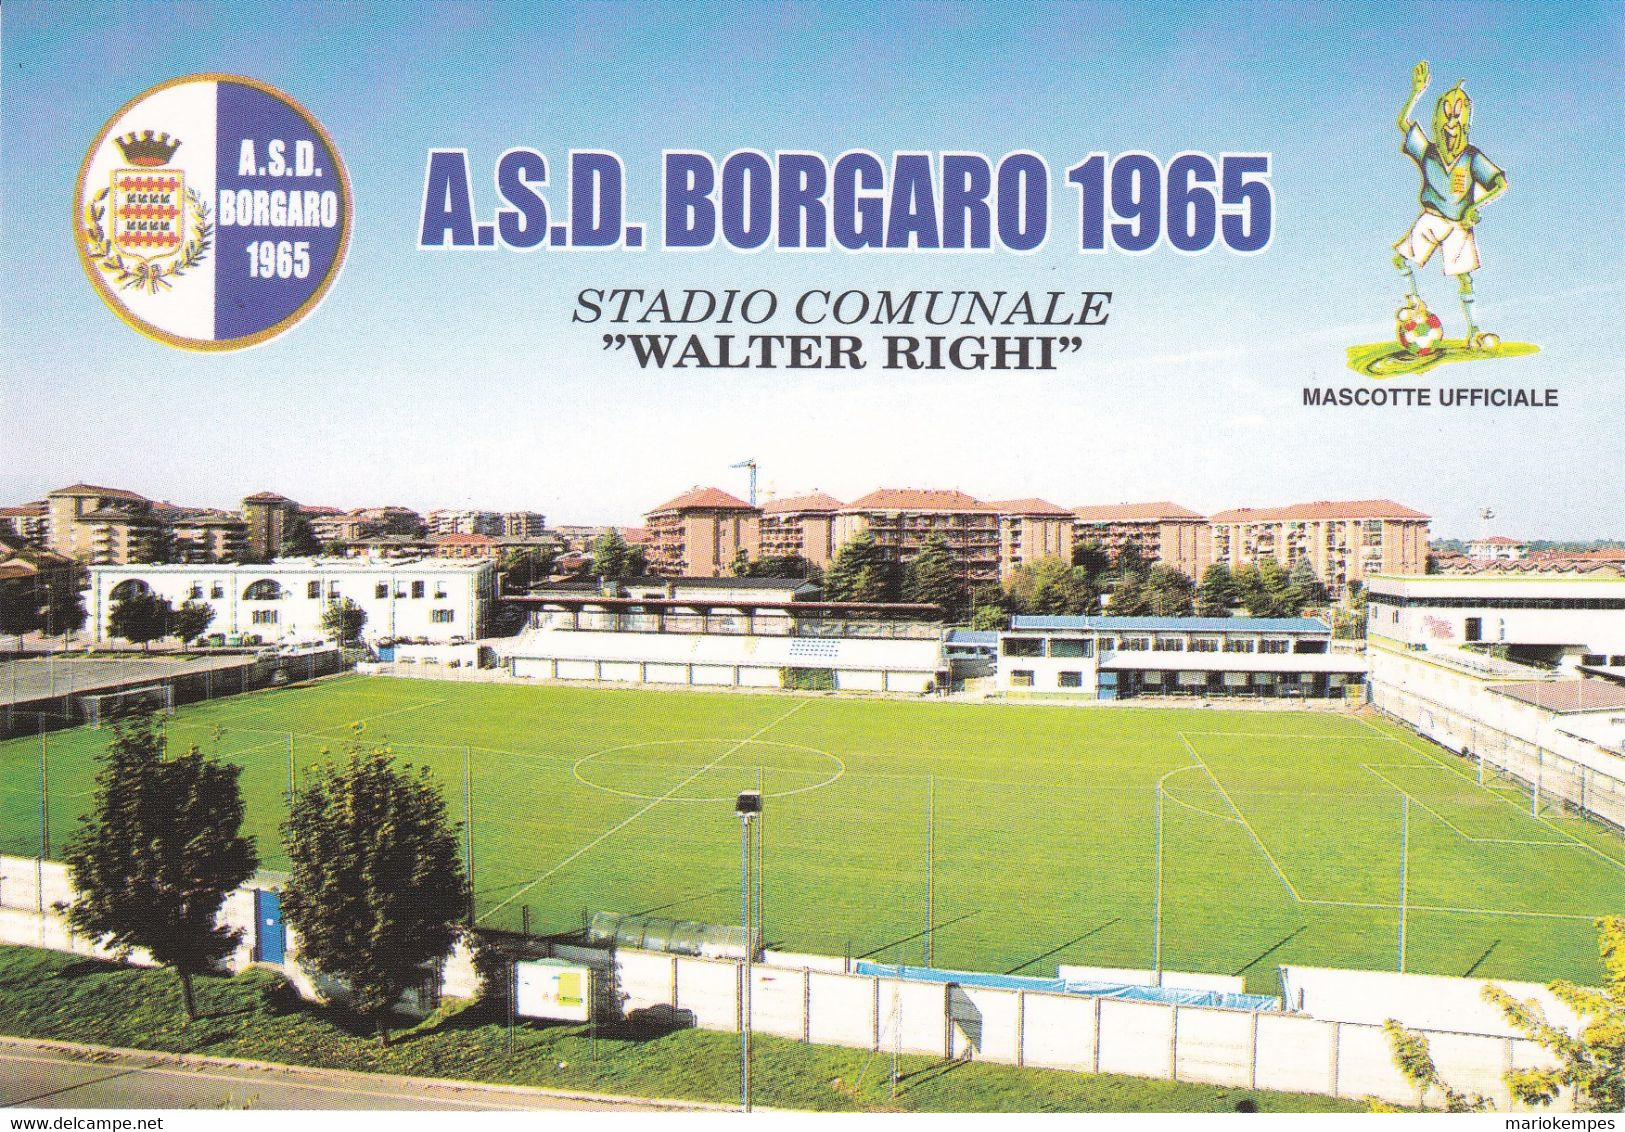 BORGARO TORINESE ( TO )_A.S.D. BORGARO 1965_STADIO COMUNALE  "WALTER RIGHI"_Stadium_Stade_Estadio_Stadion - Stadia & Sportstructuren